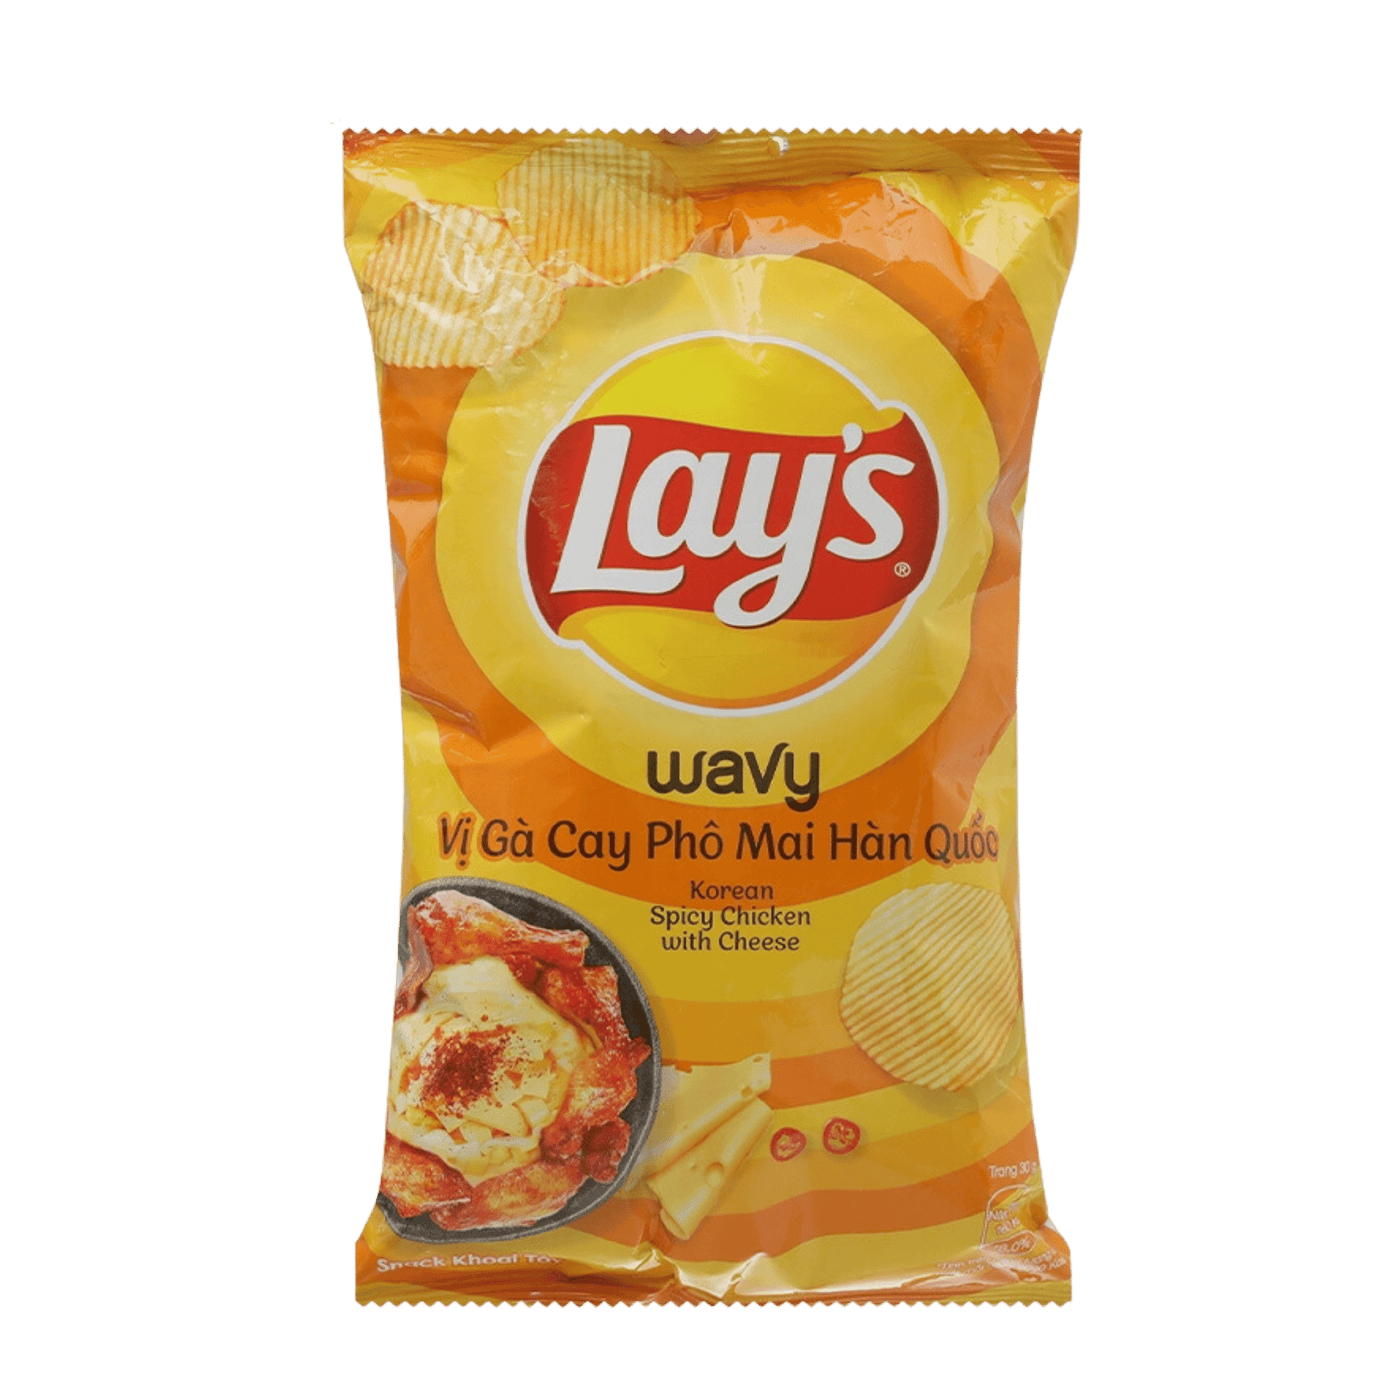 Lay's Chips - Vietnam